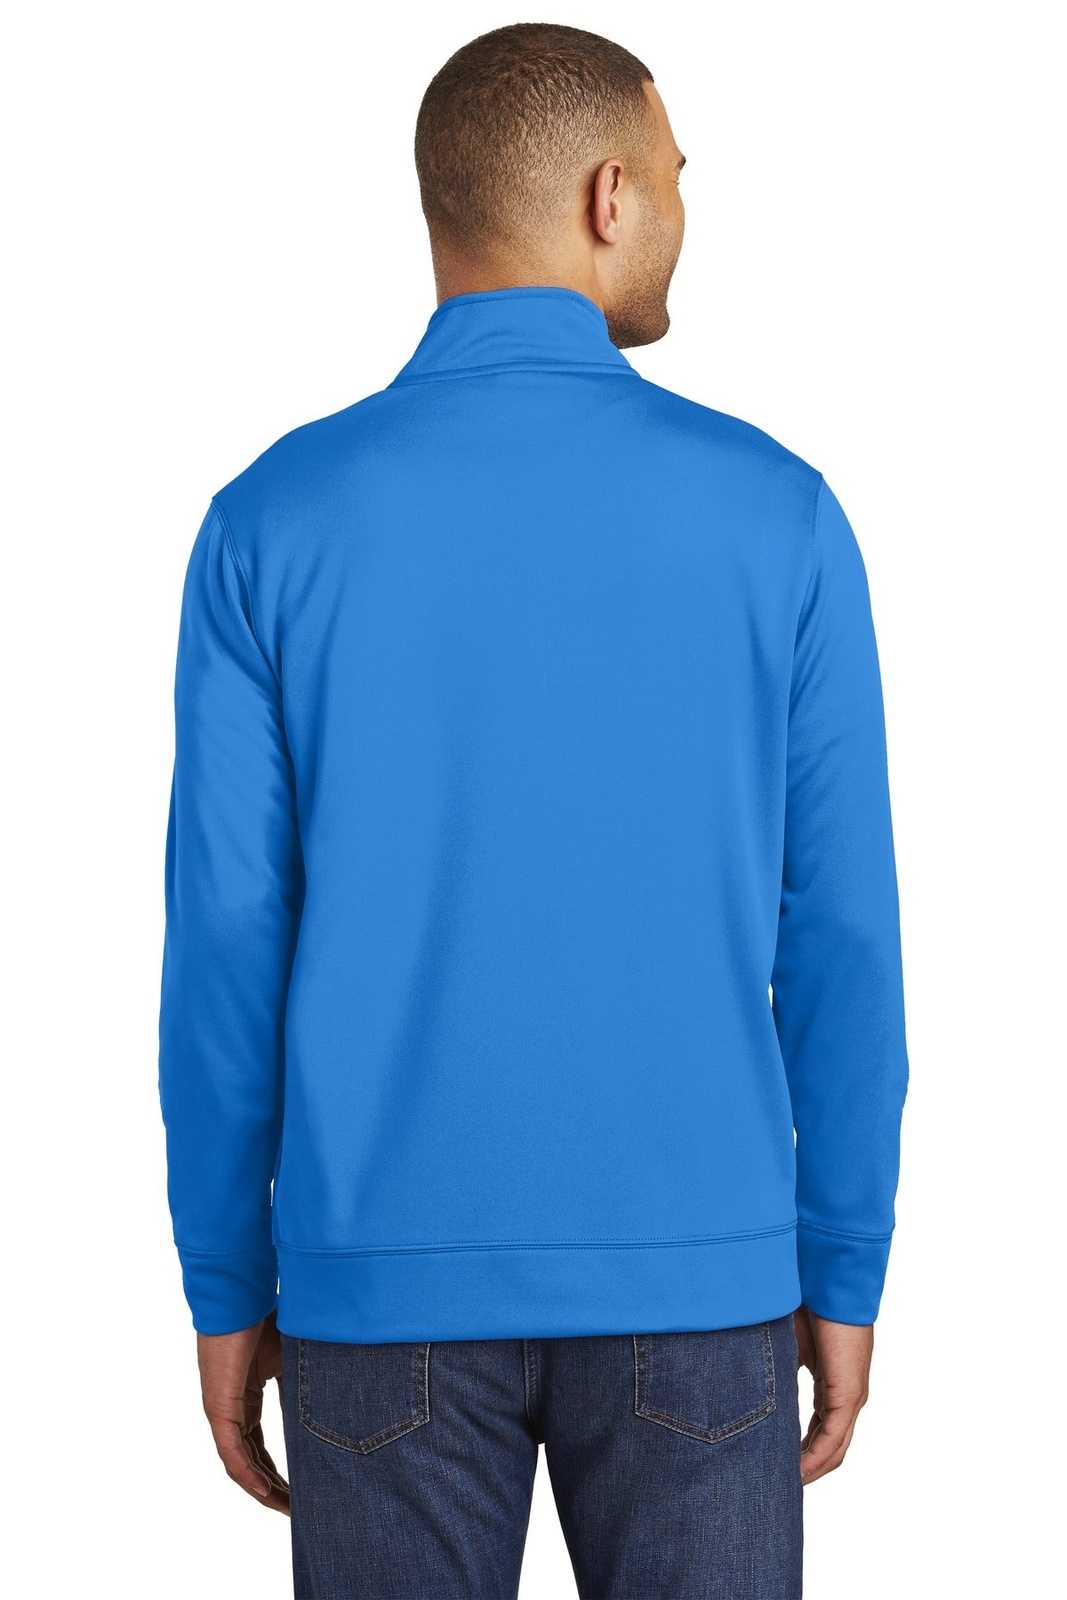 Port &amp; Company PC590Q Fleece 1/4-Zip Pullover Sweatshirt - Royal - HIT a Double - 2